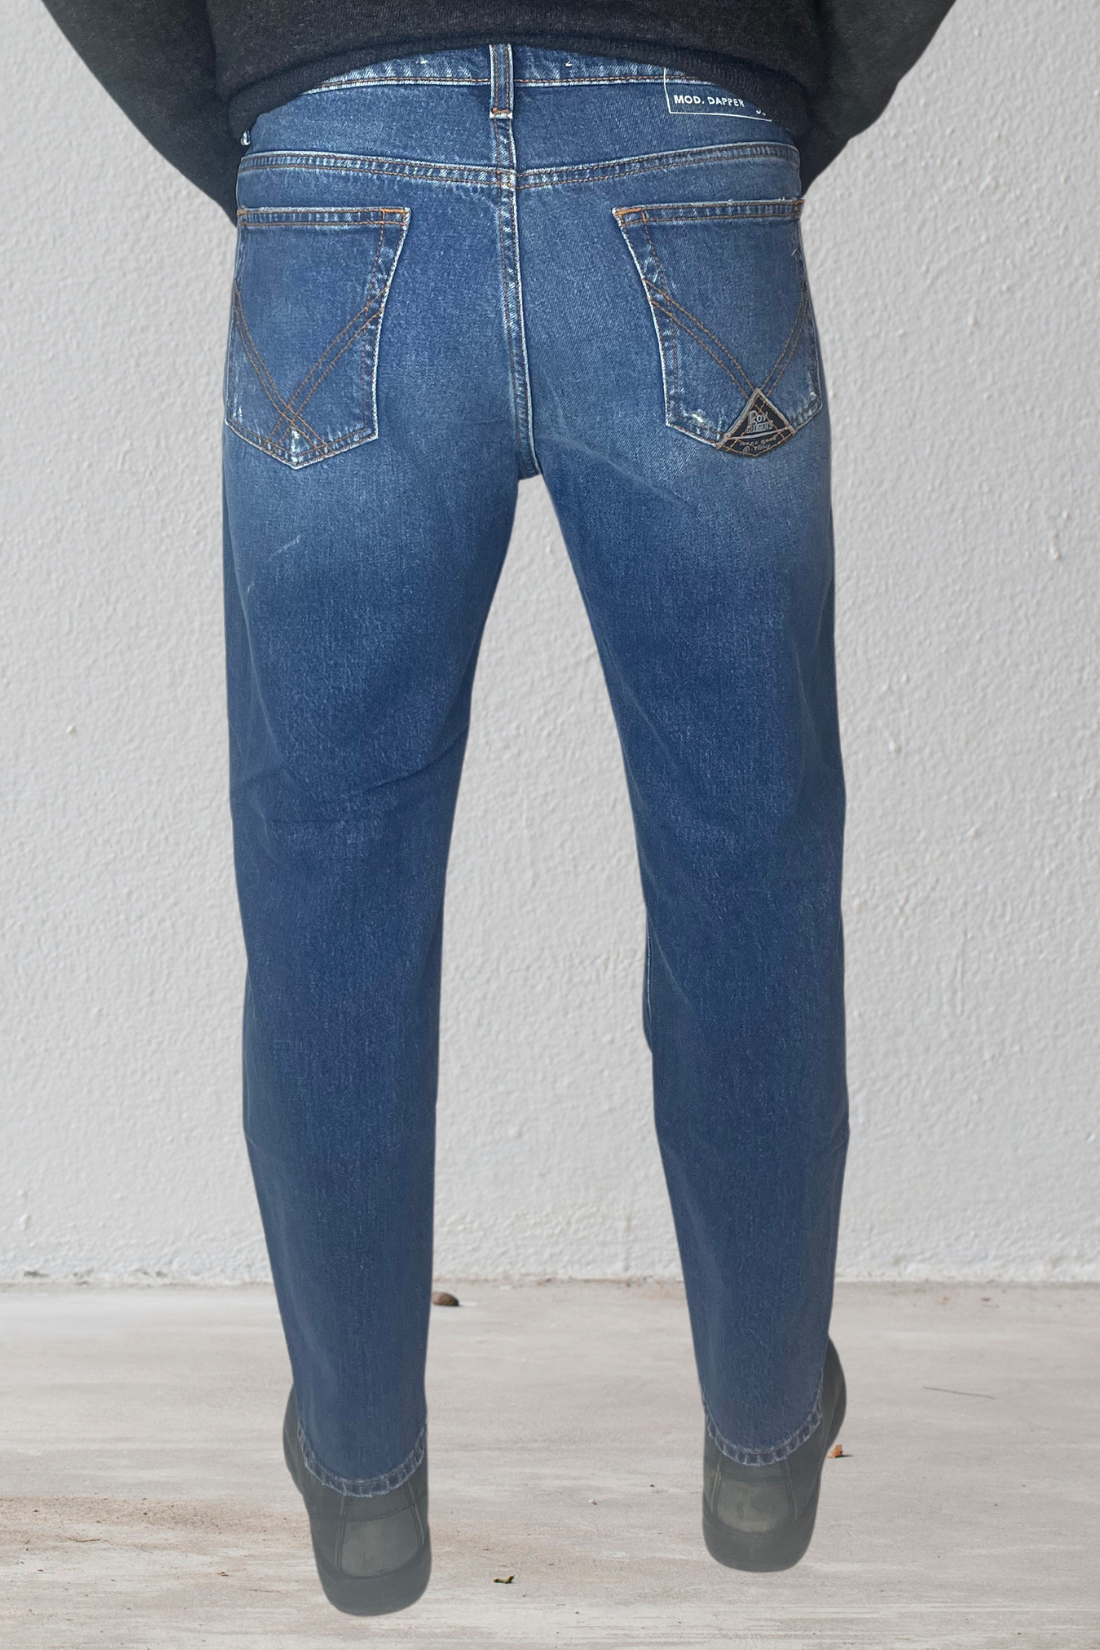 Roy Roger's Jeans Dapper Denim